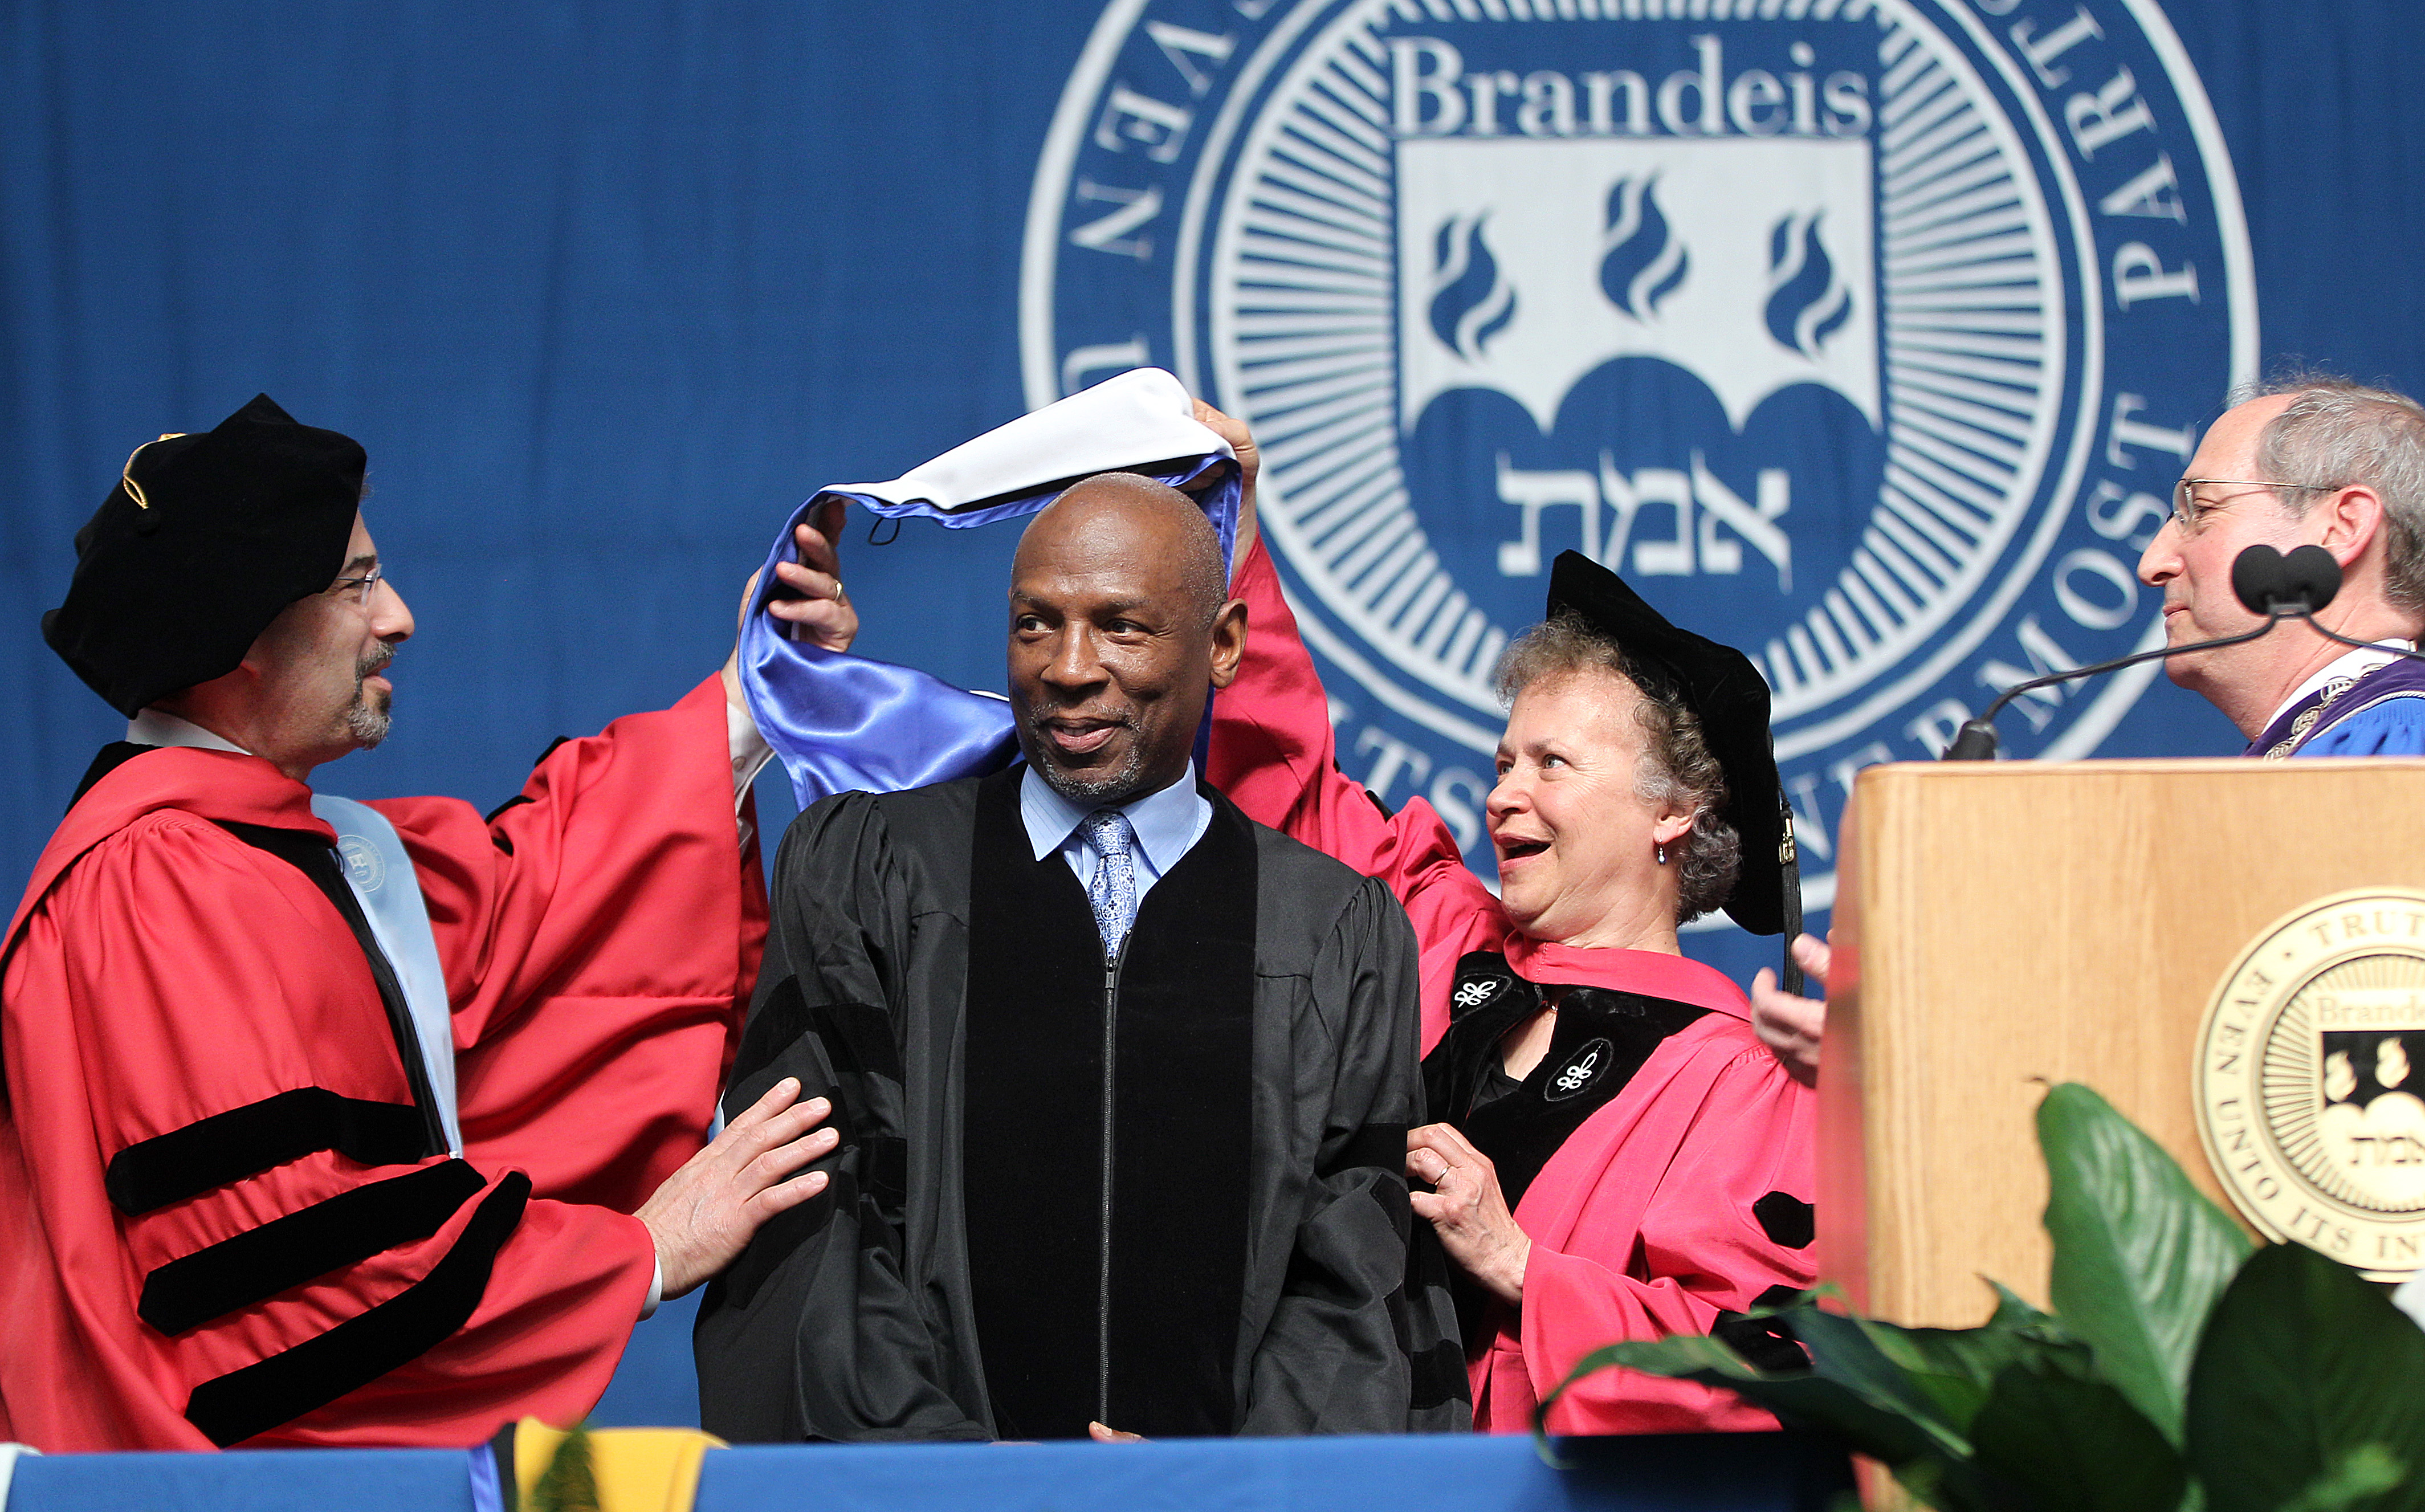 Brandeis University 63rd Commencement